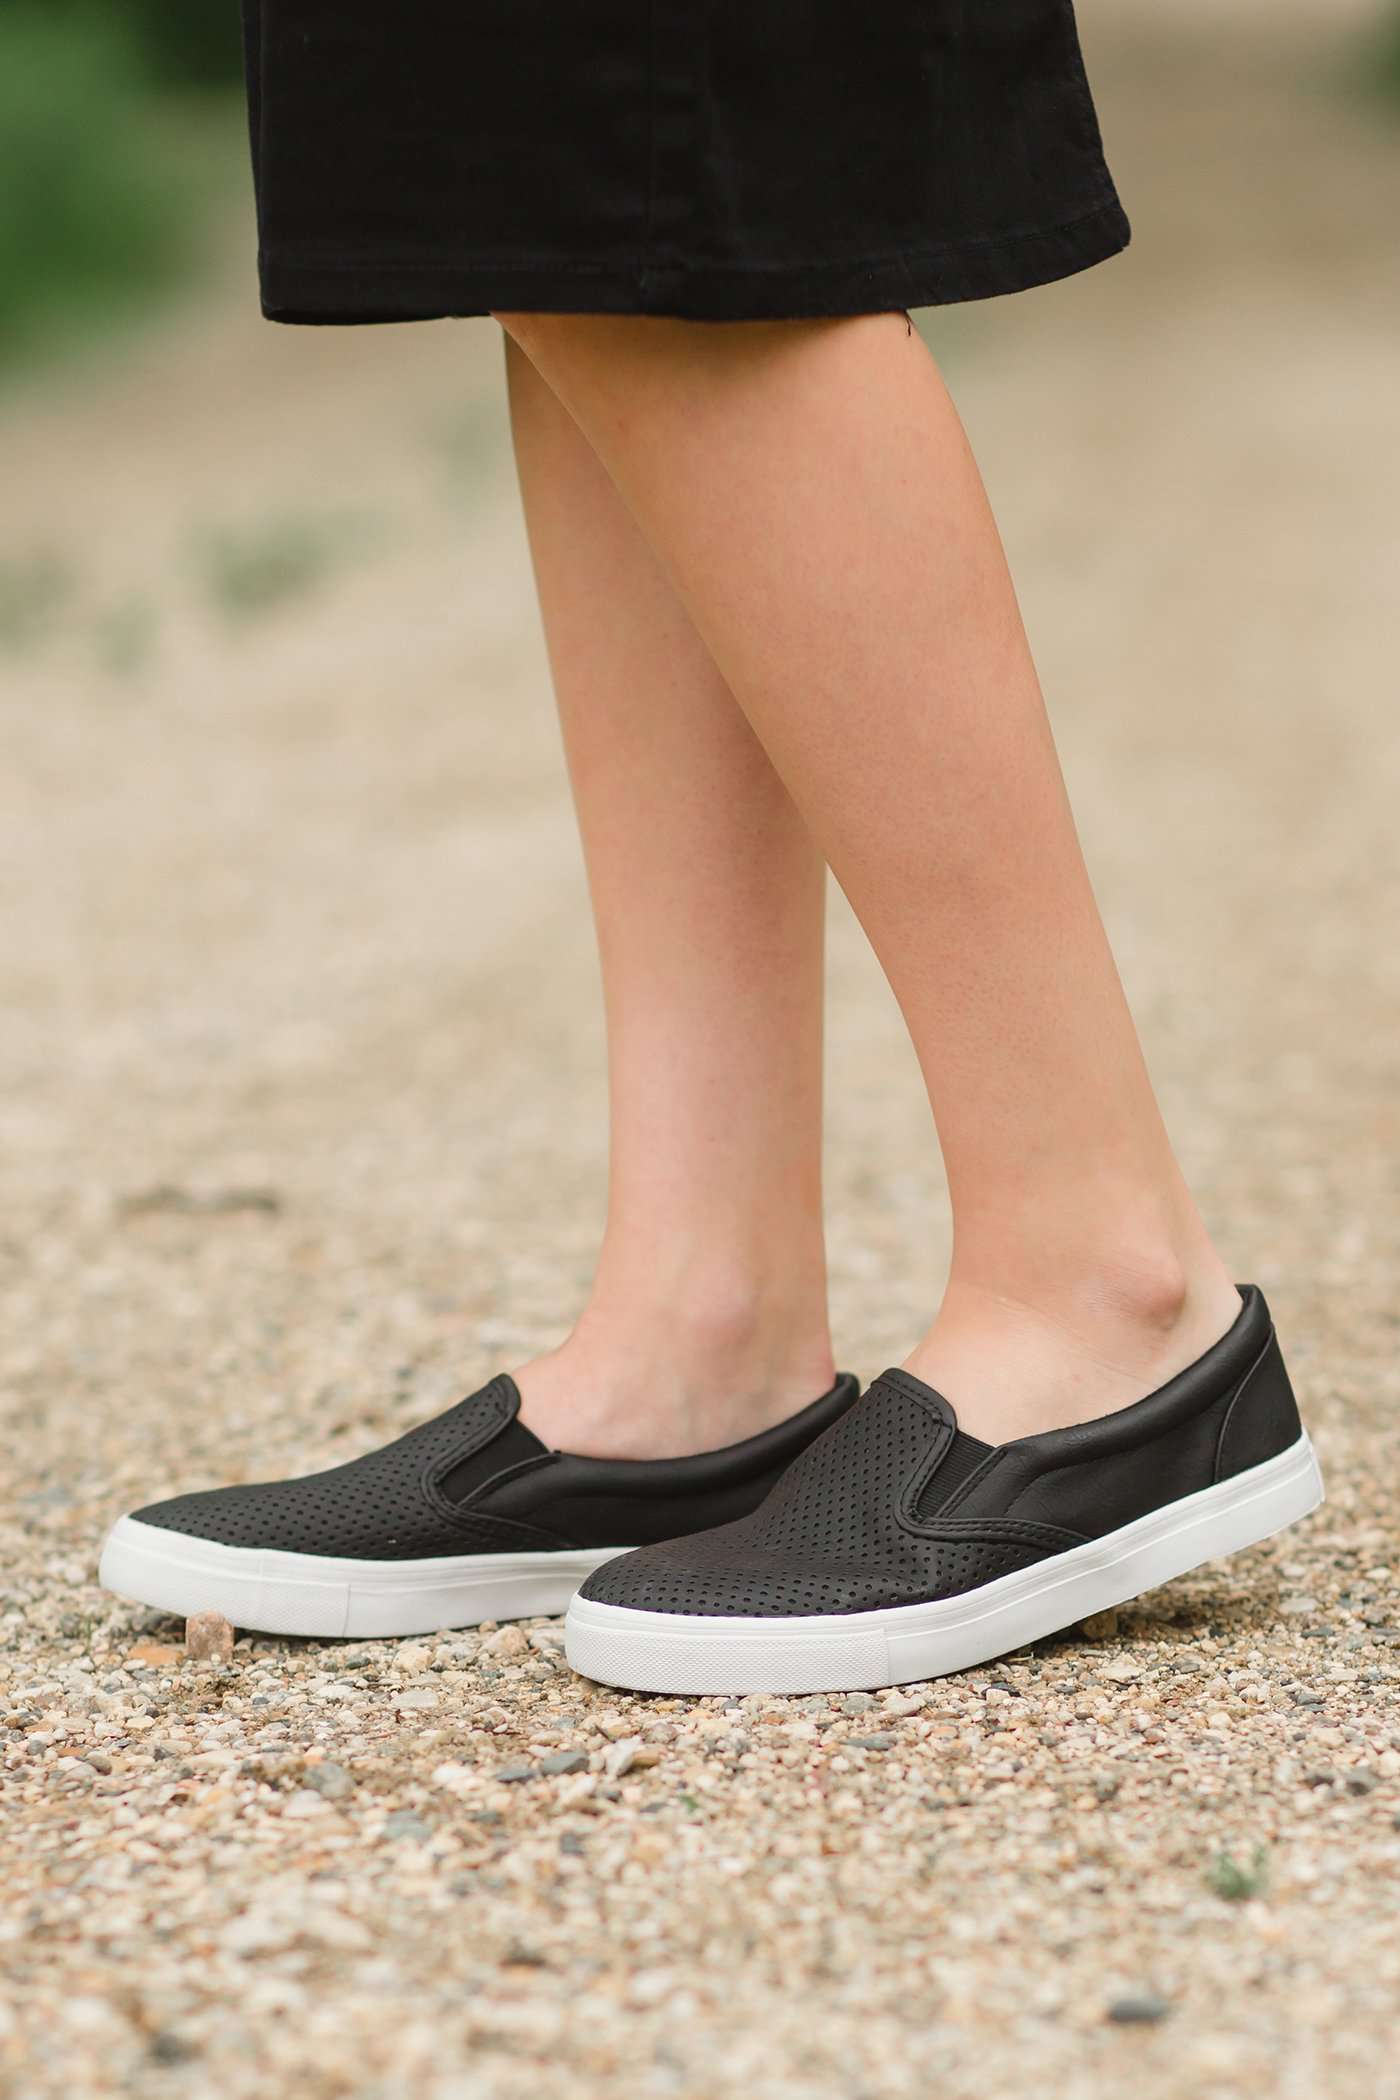 Slip On Sneakers - FINAL SALE Shoes Black / 5.5